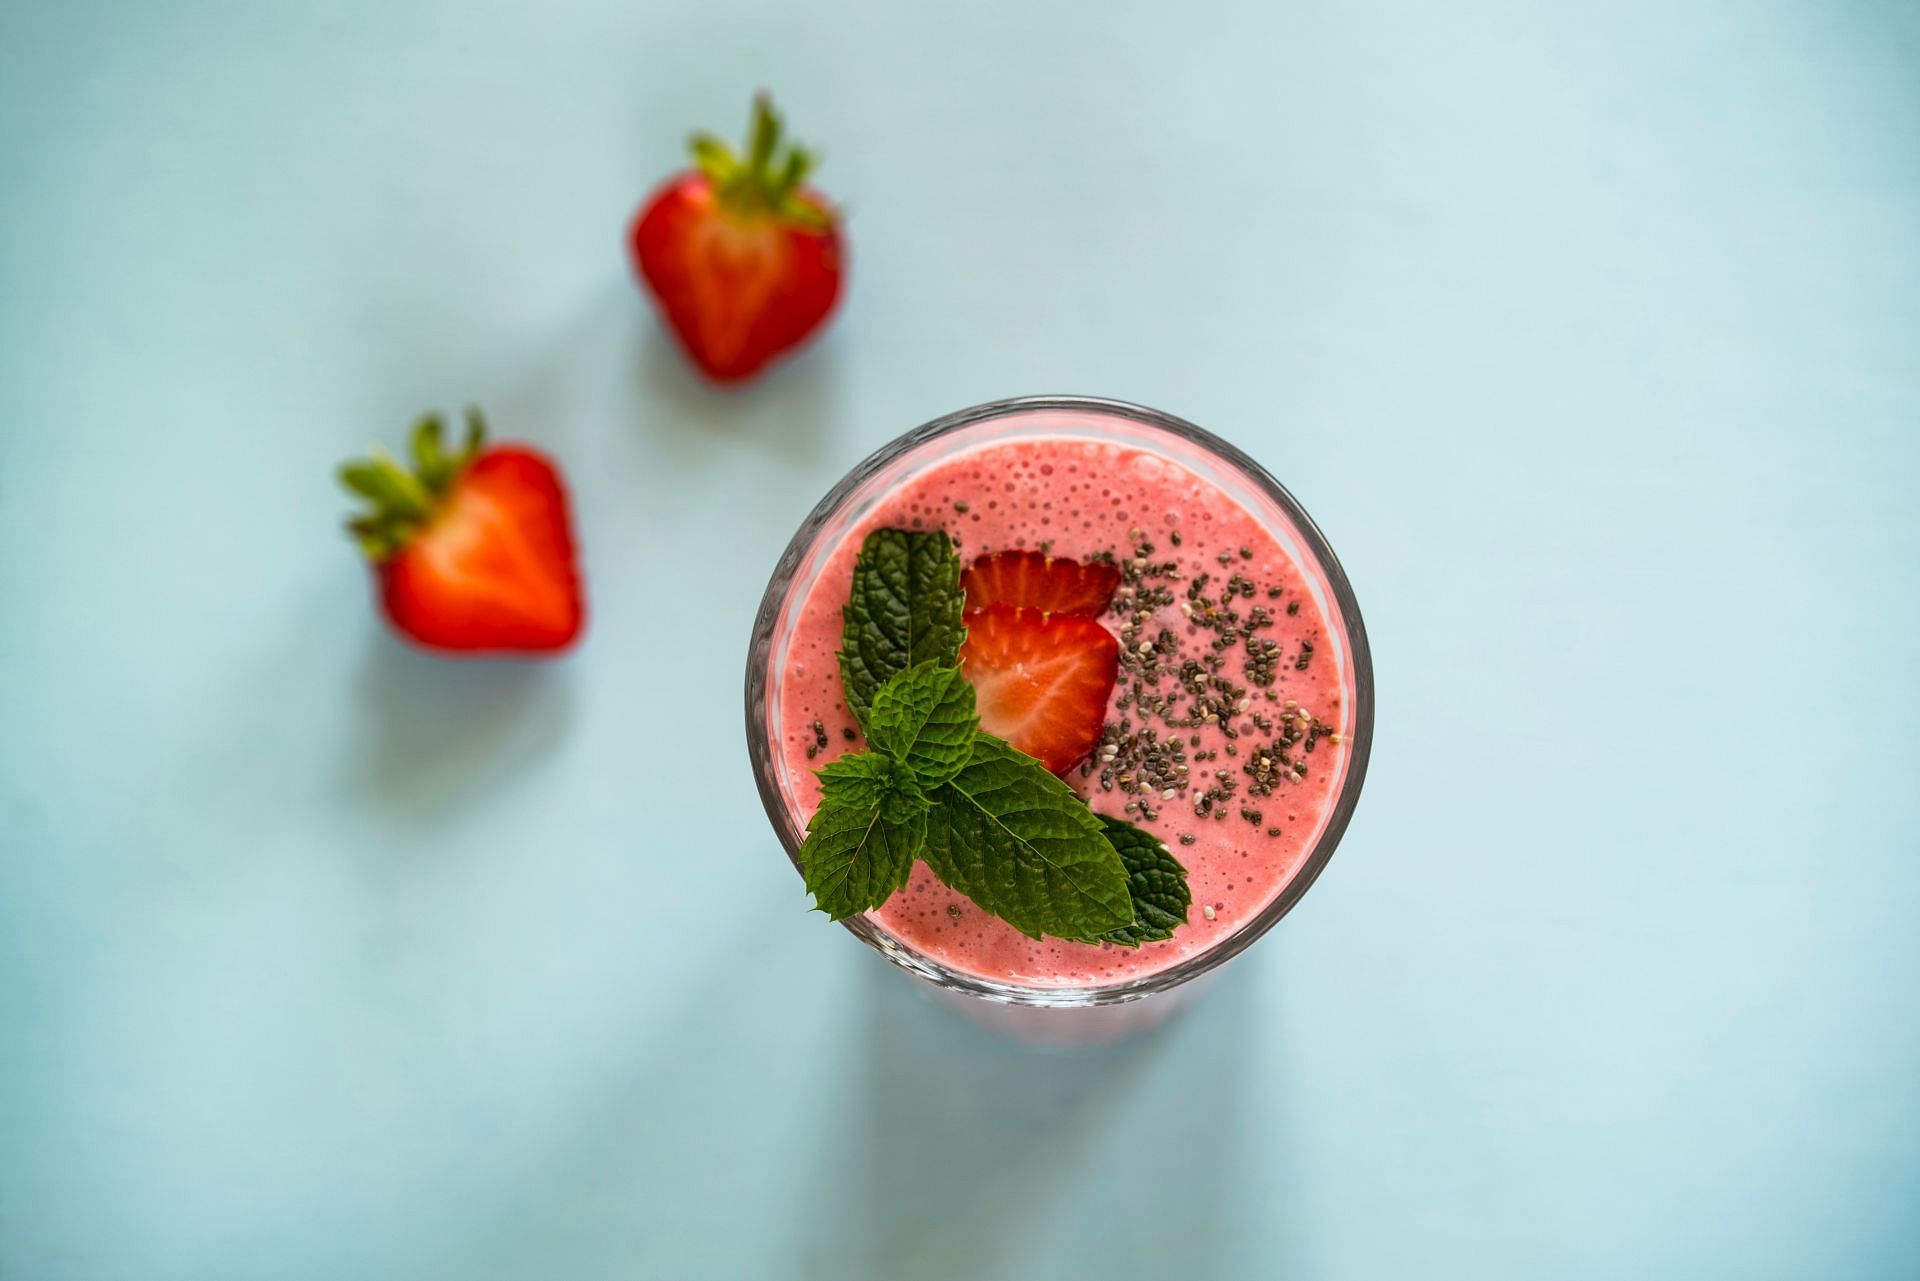 Homemade smoothies are healthier than sugary beverages (Image via Unsplash/Joanna Kosinska)